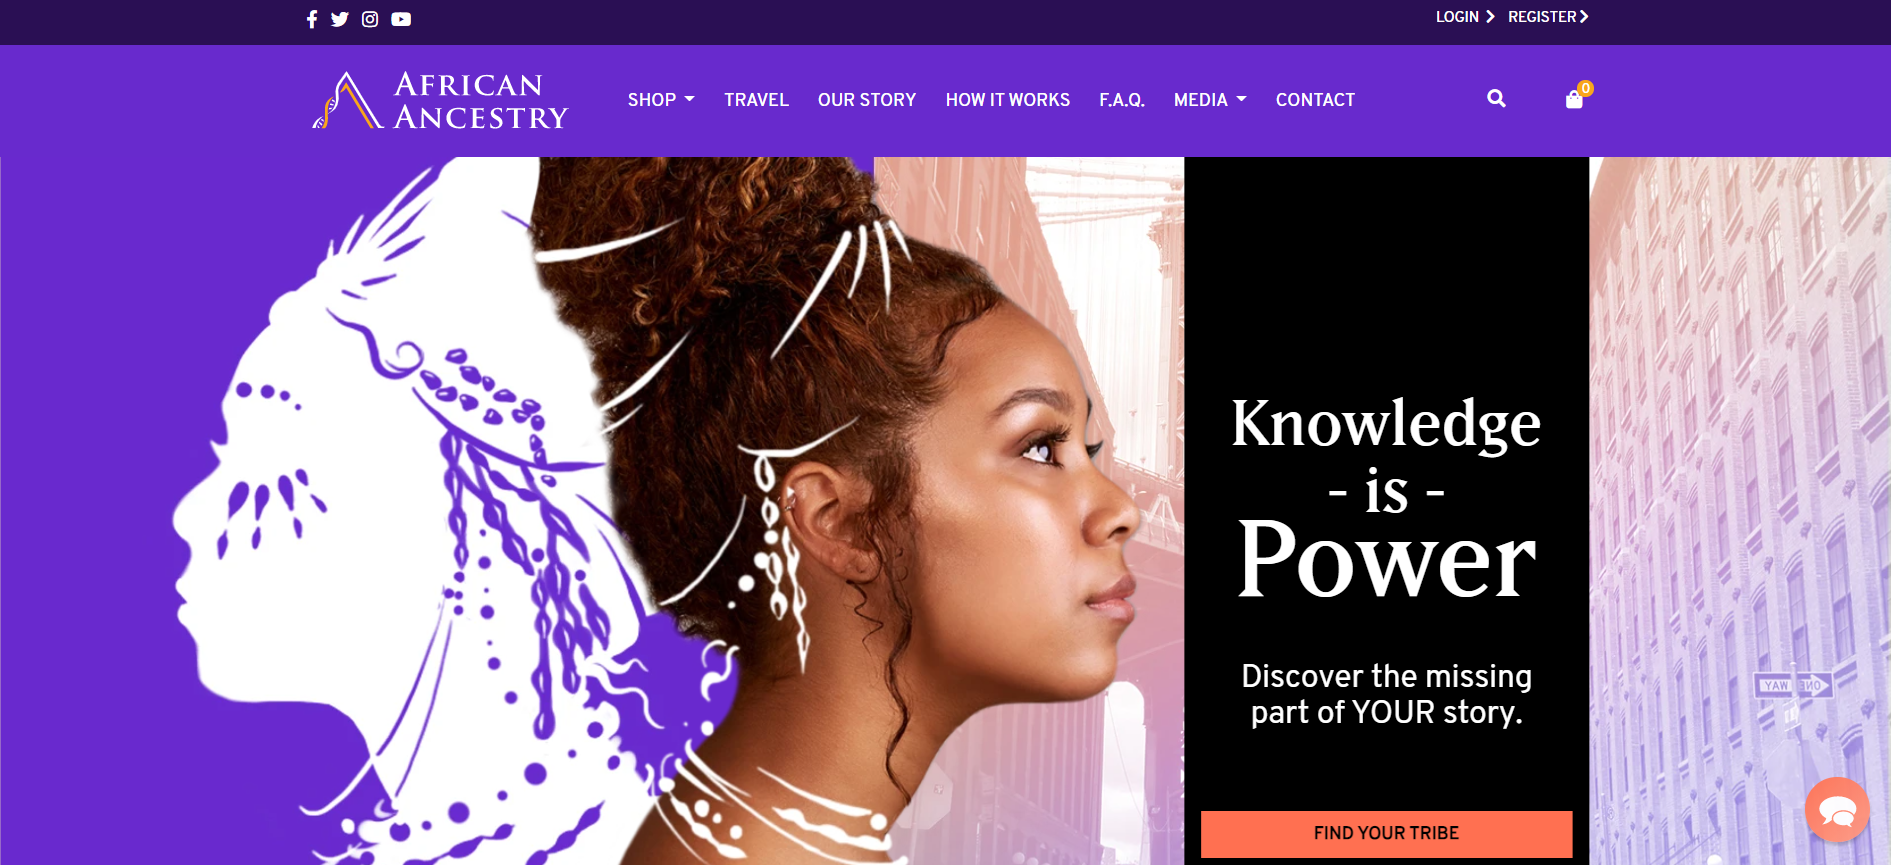 African Ancestry homepage